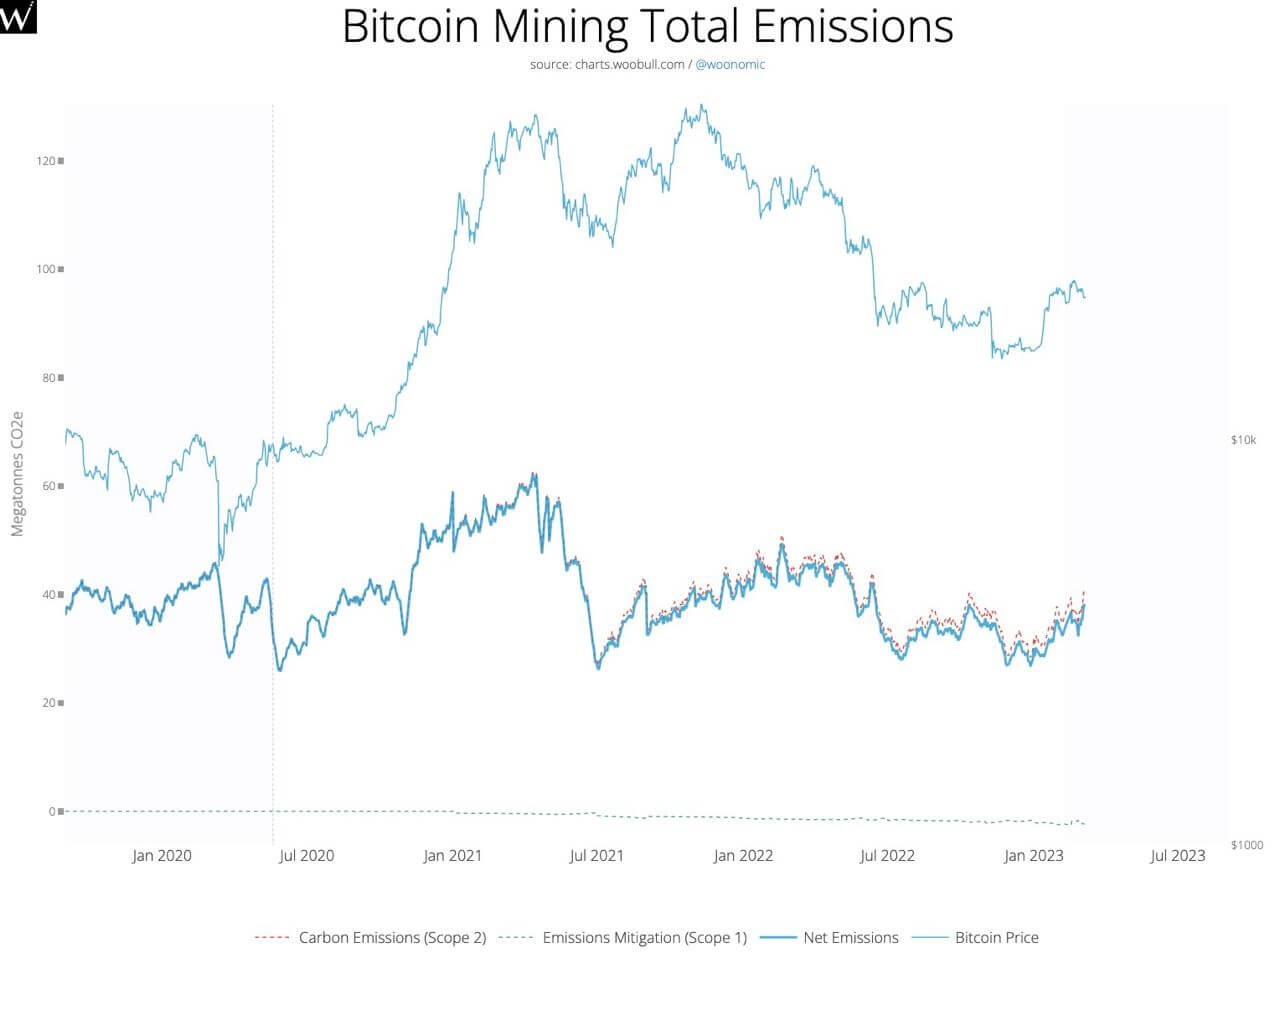 BTC mining total emissions (Source: DSBatten)